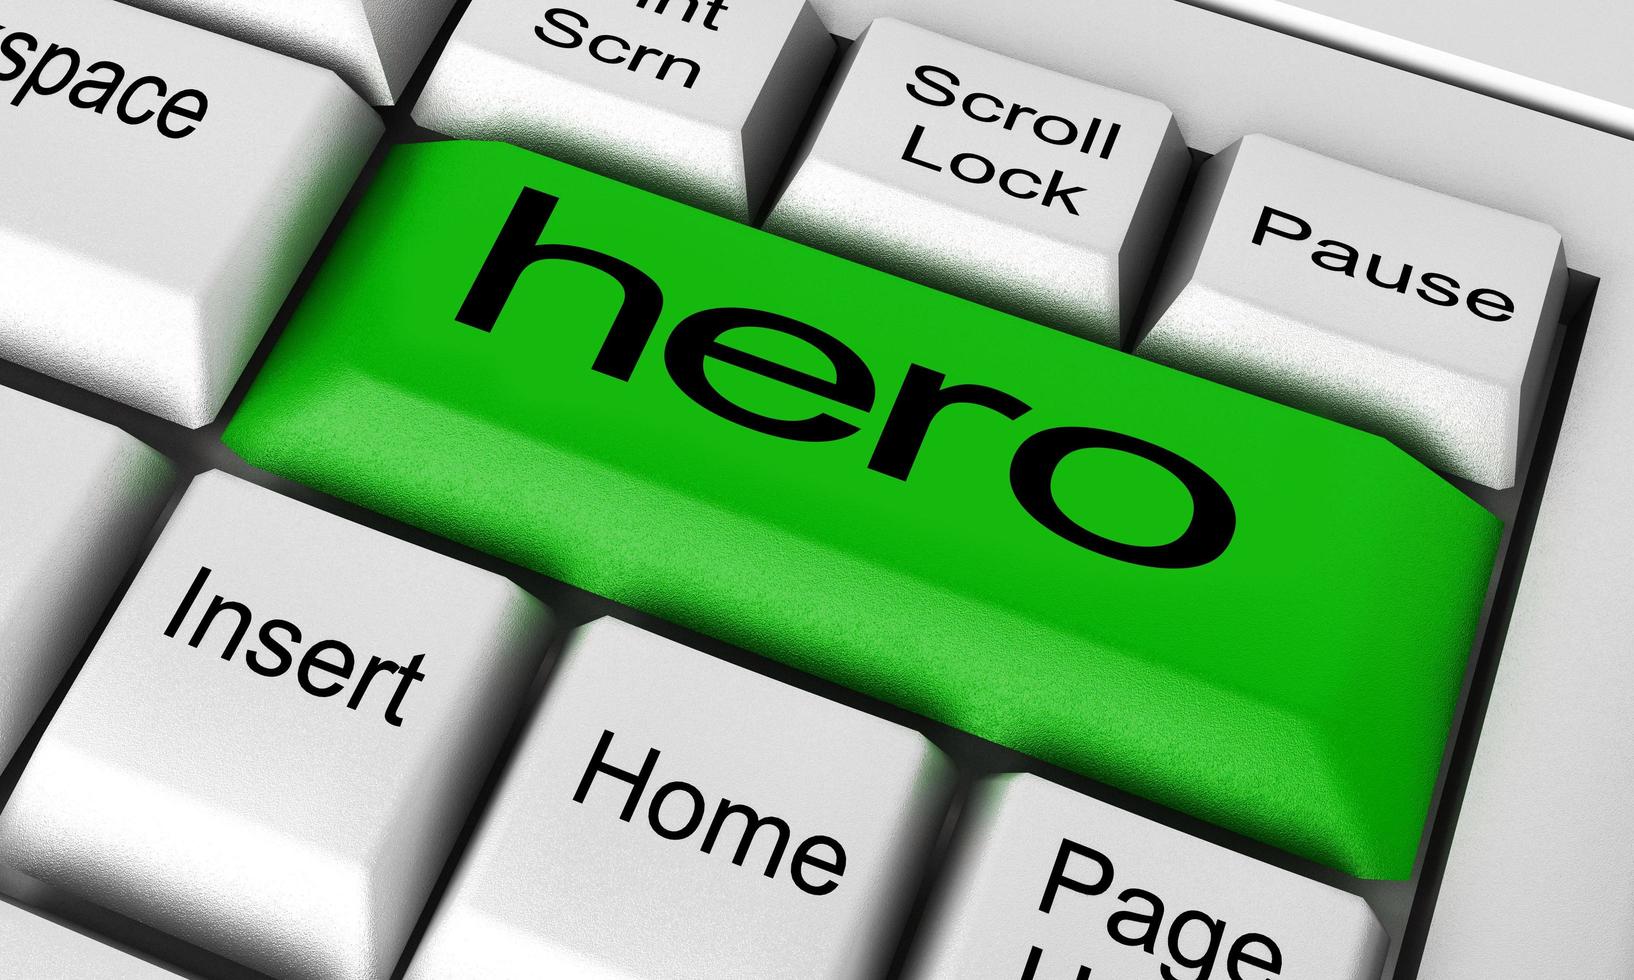 hero word on keyboard button photo